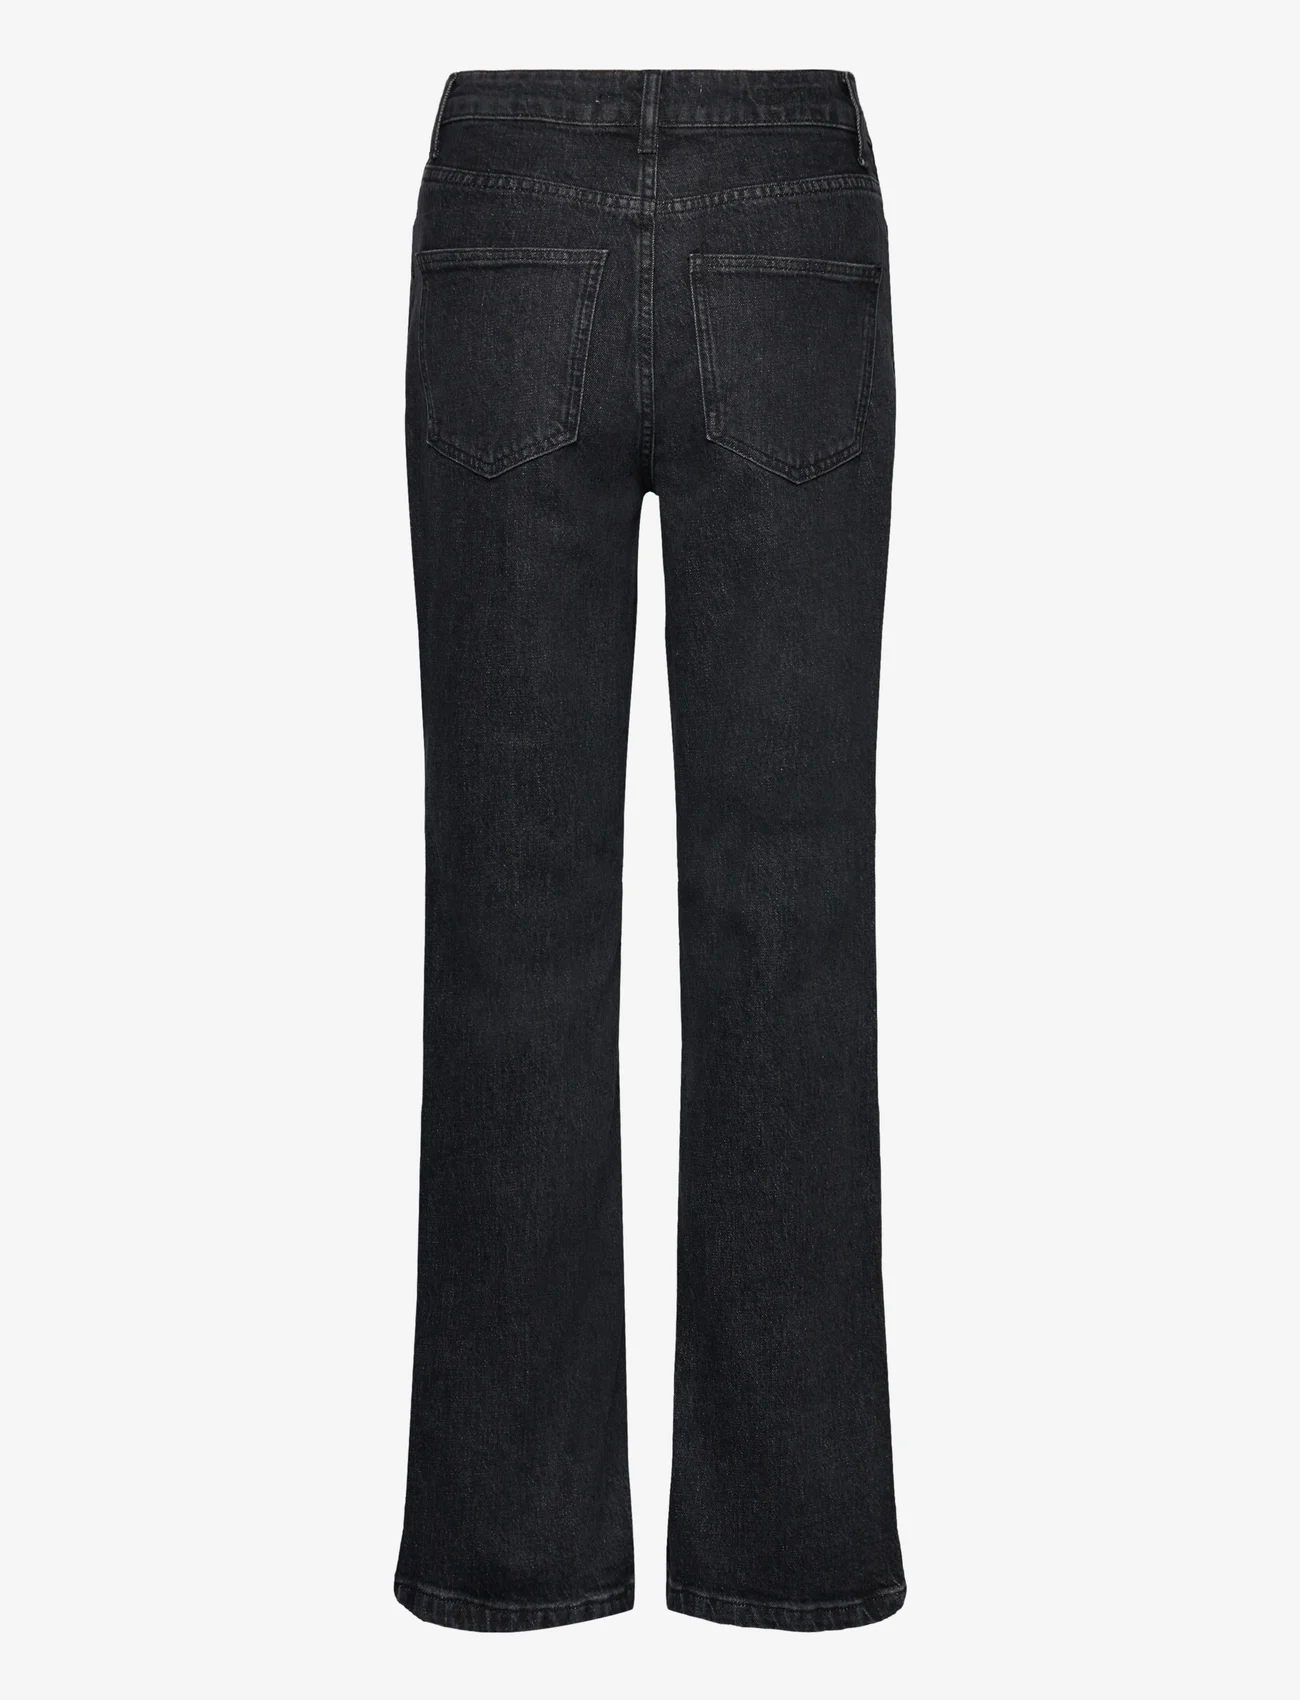 Gestuz - LucieGZ HW straight jeans NOOS - tiesaus kirpimo džinsai - dark grey washed - 1